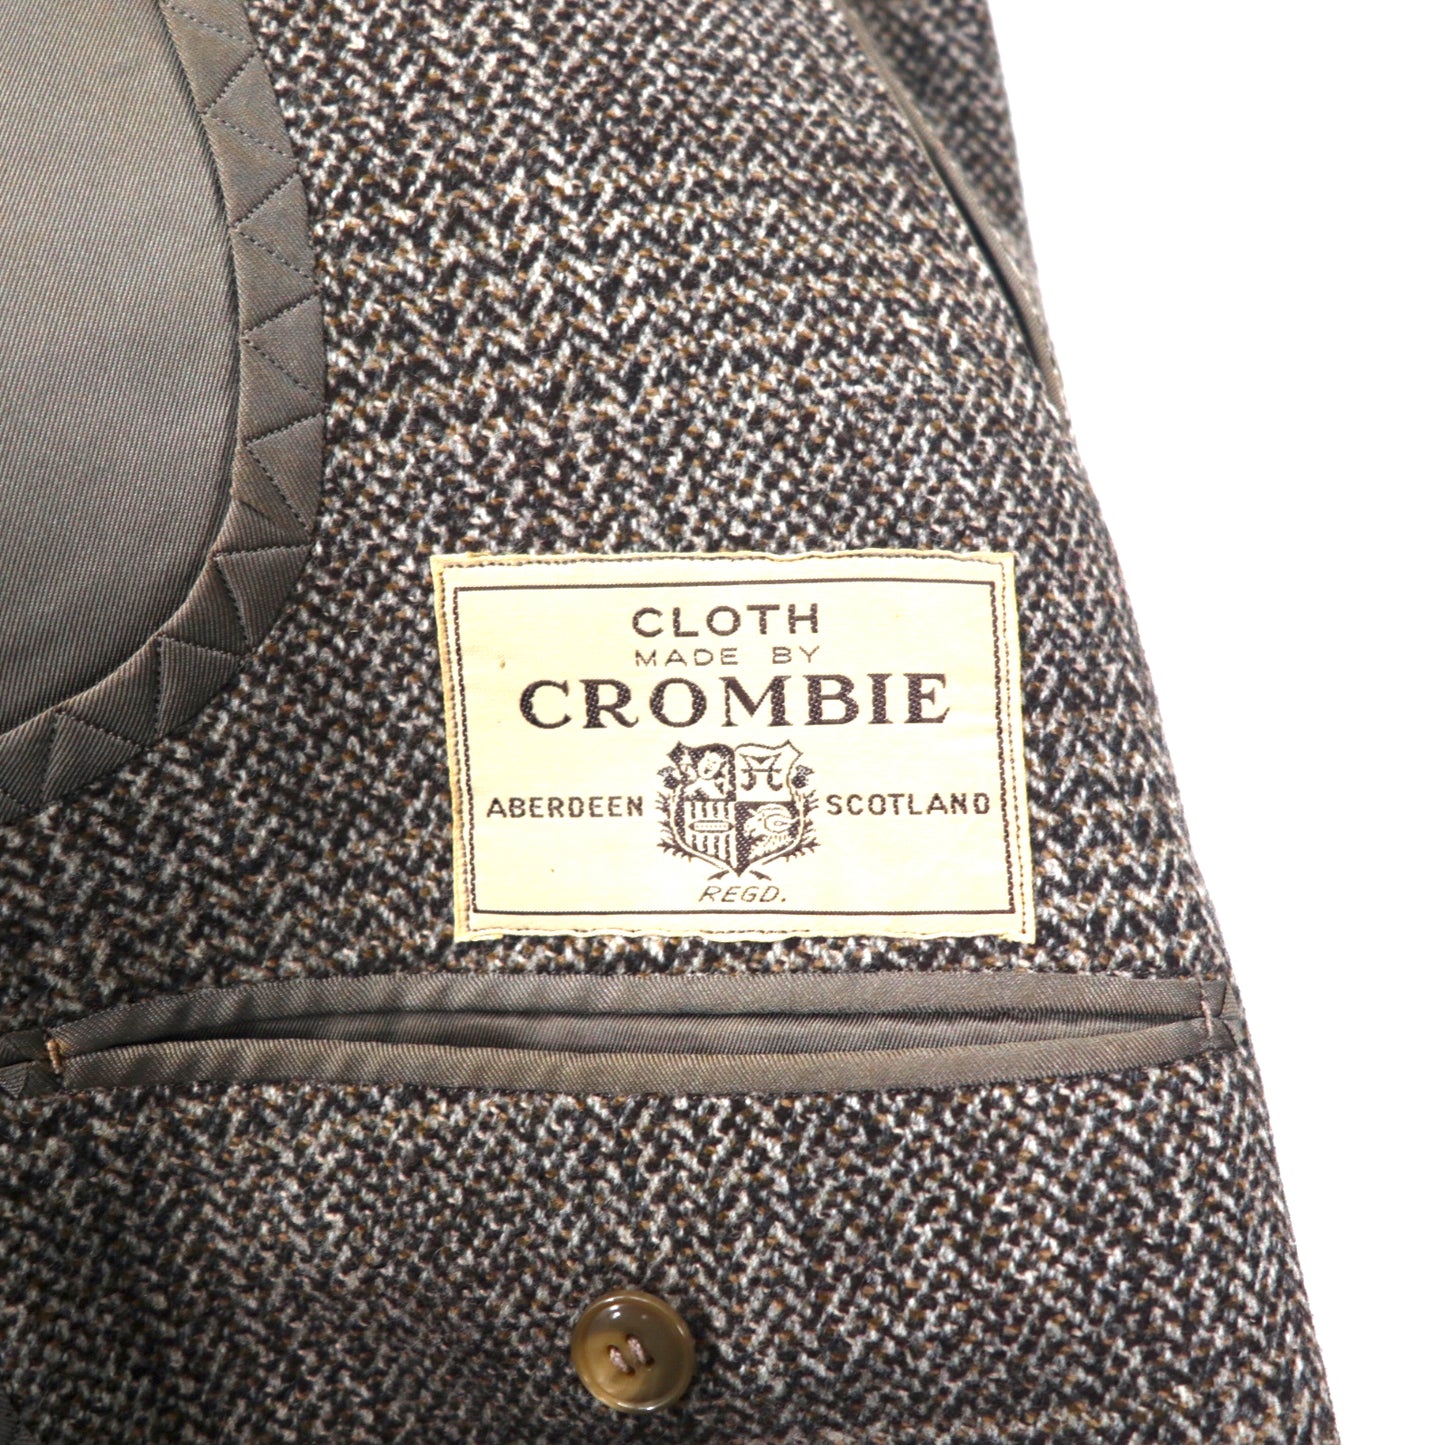 Vintage British Tweed Over Coat 60年代 CLOTH MADE BY CROMBIE OF SCOTLAND チェスターコート M グレー グレンチェック ウール